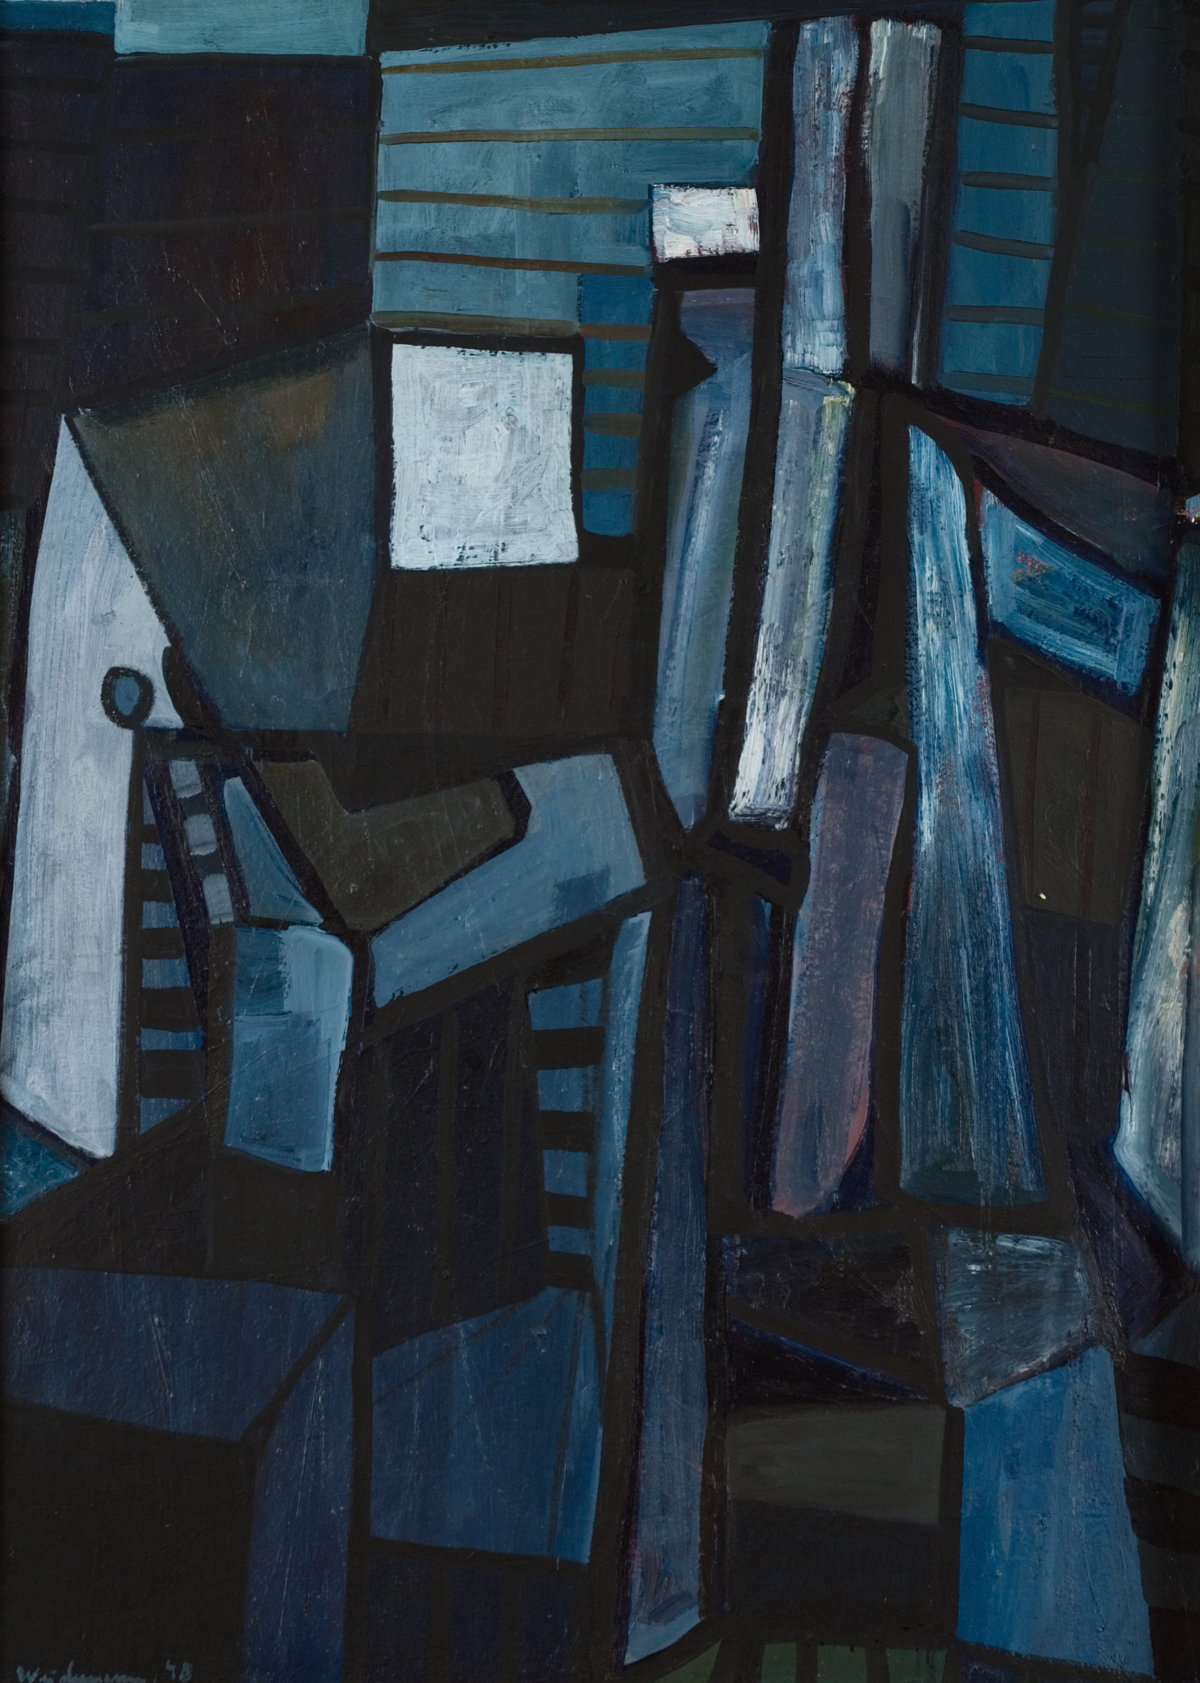 Jakob Weidemann, Blue composition, 1948, Christen Sveaas Art Foundation. Photo: Thomas Widerberg

